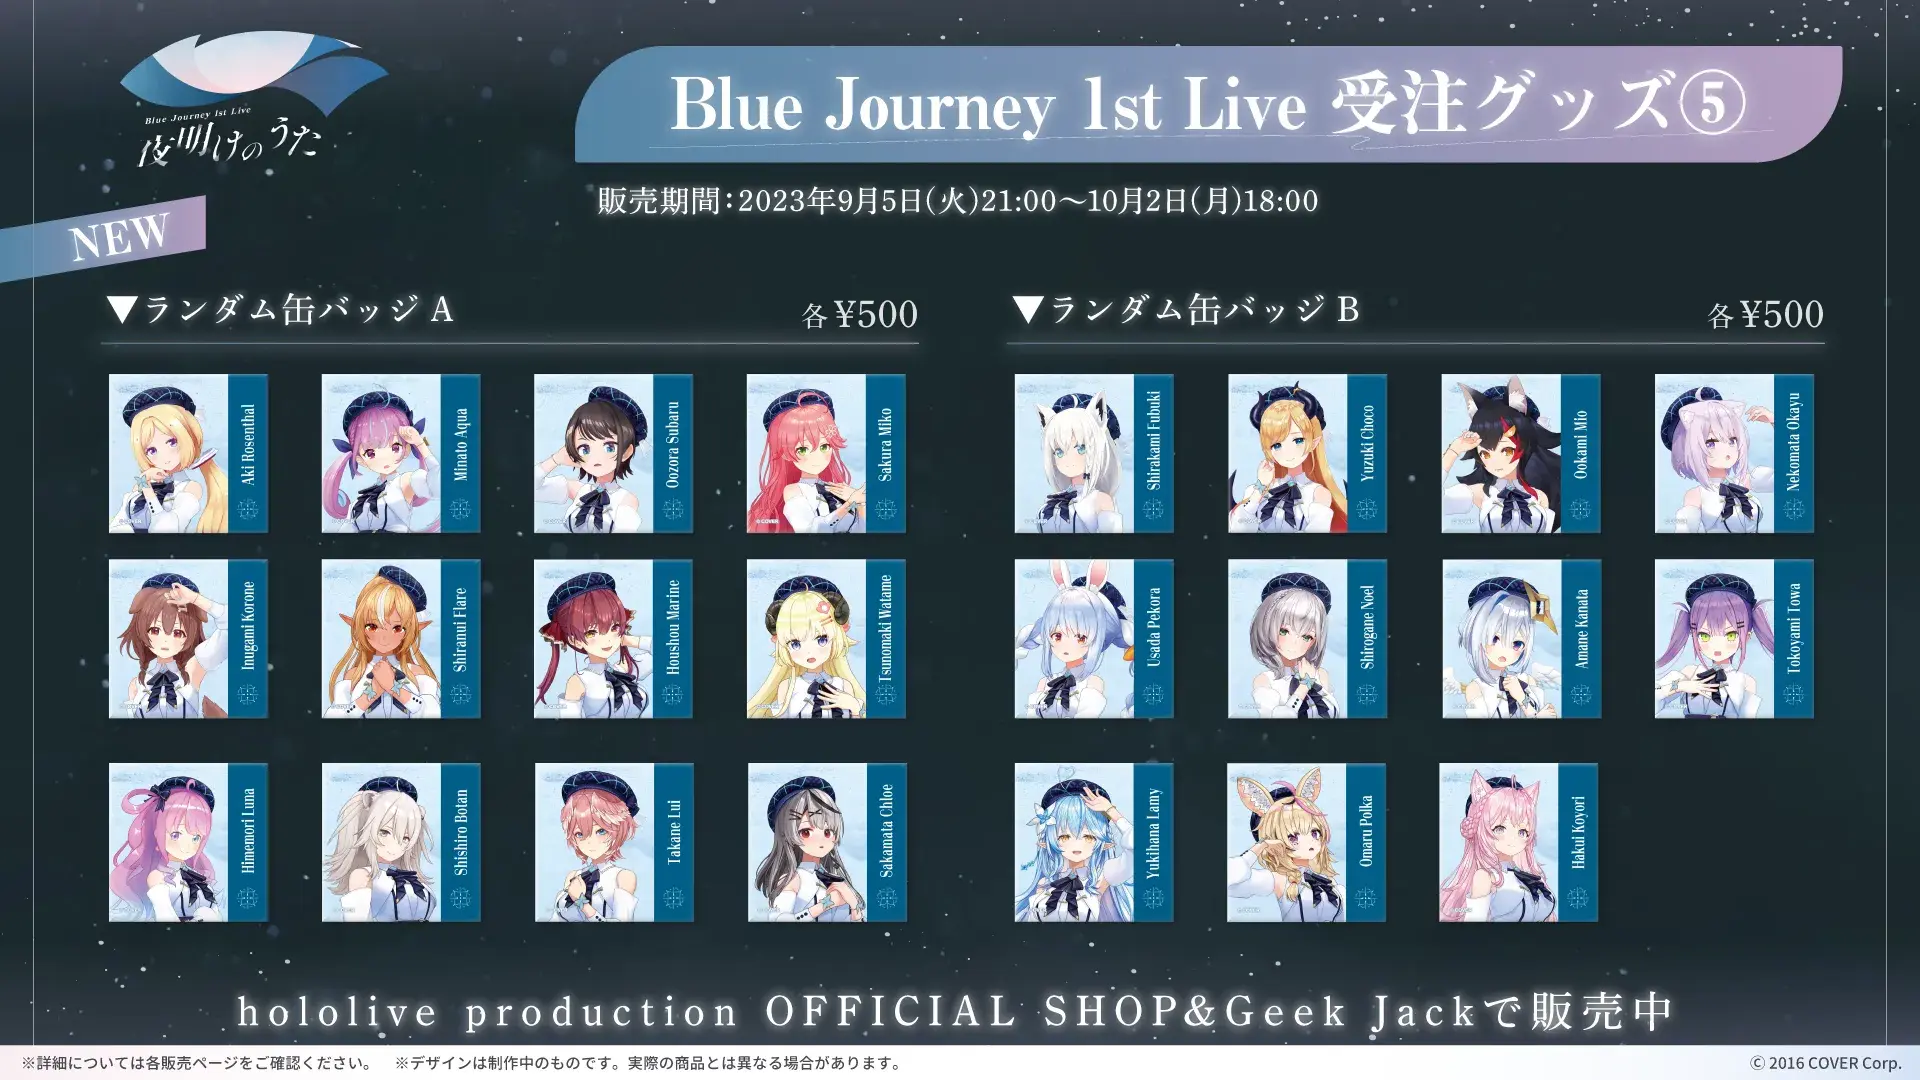 Blue Journey 1st Live「夜明けのうた」 | イベント情報 | hololive